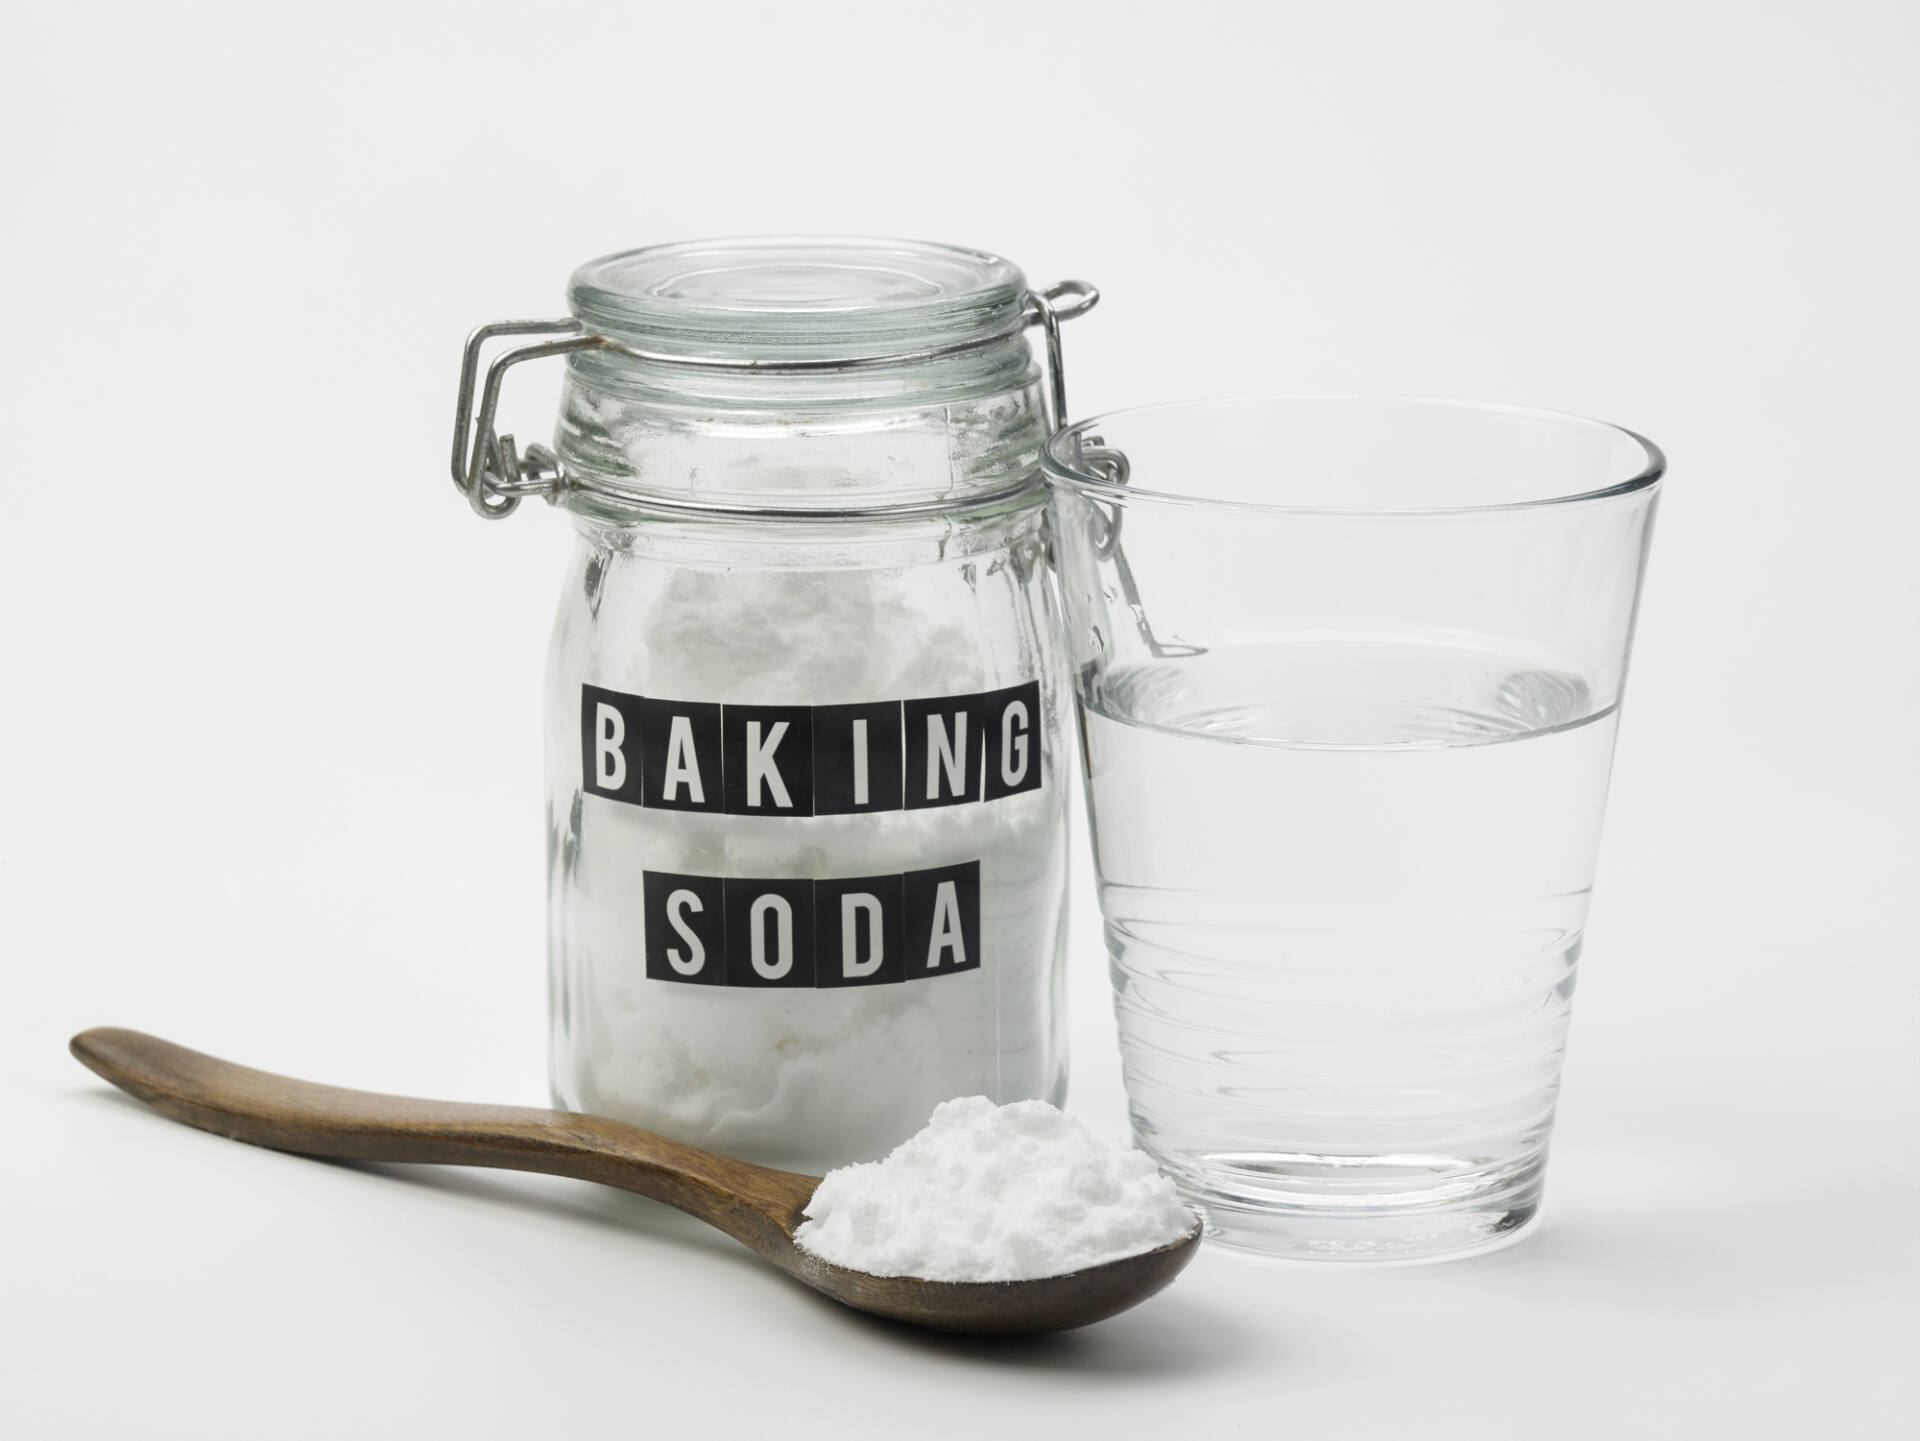 Baking soda and sea salt combo